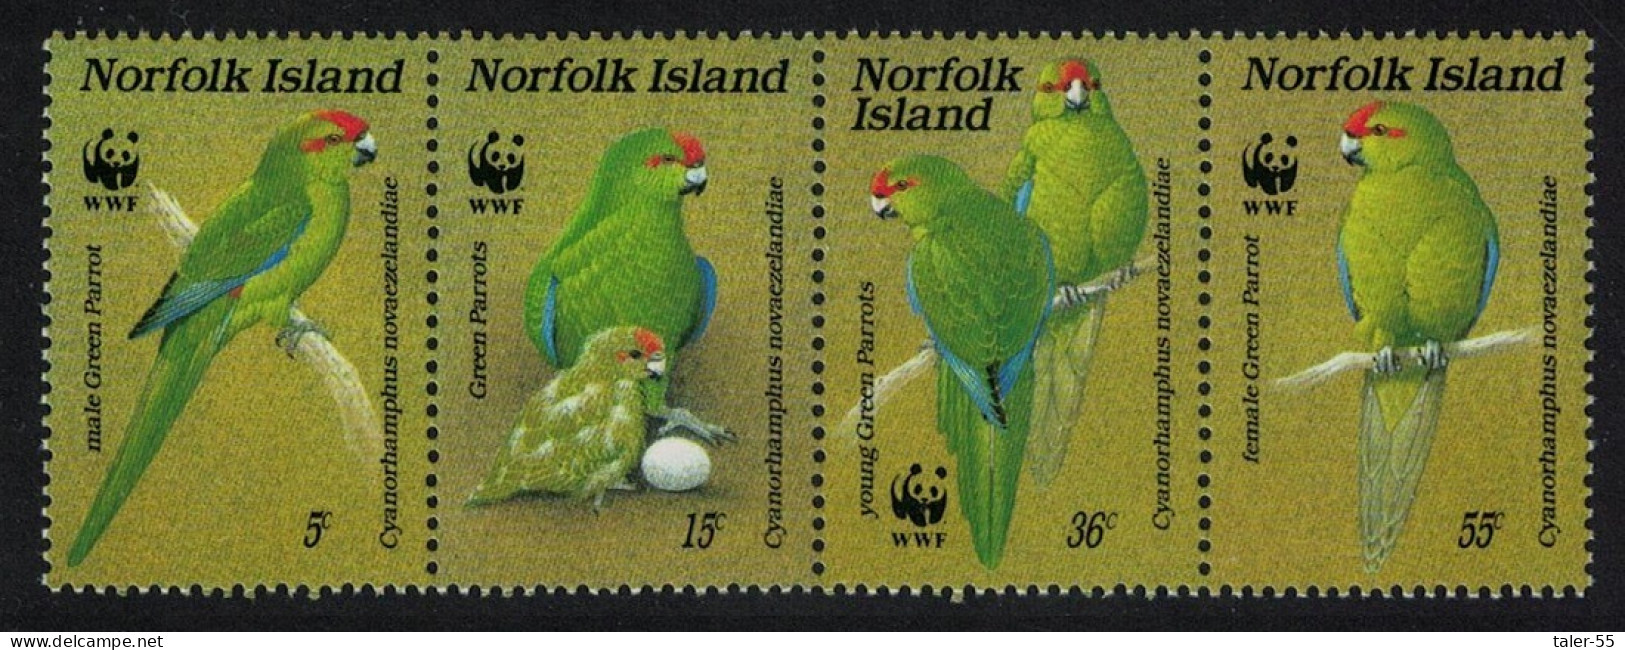 Norfolk Birds WWF Green Parrot Strip Of 4v 1987 MNH SG#425-428 MI#421-424 Sc#421 A-d - Norfolk Island